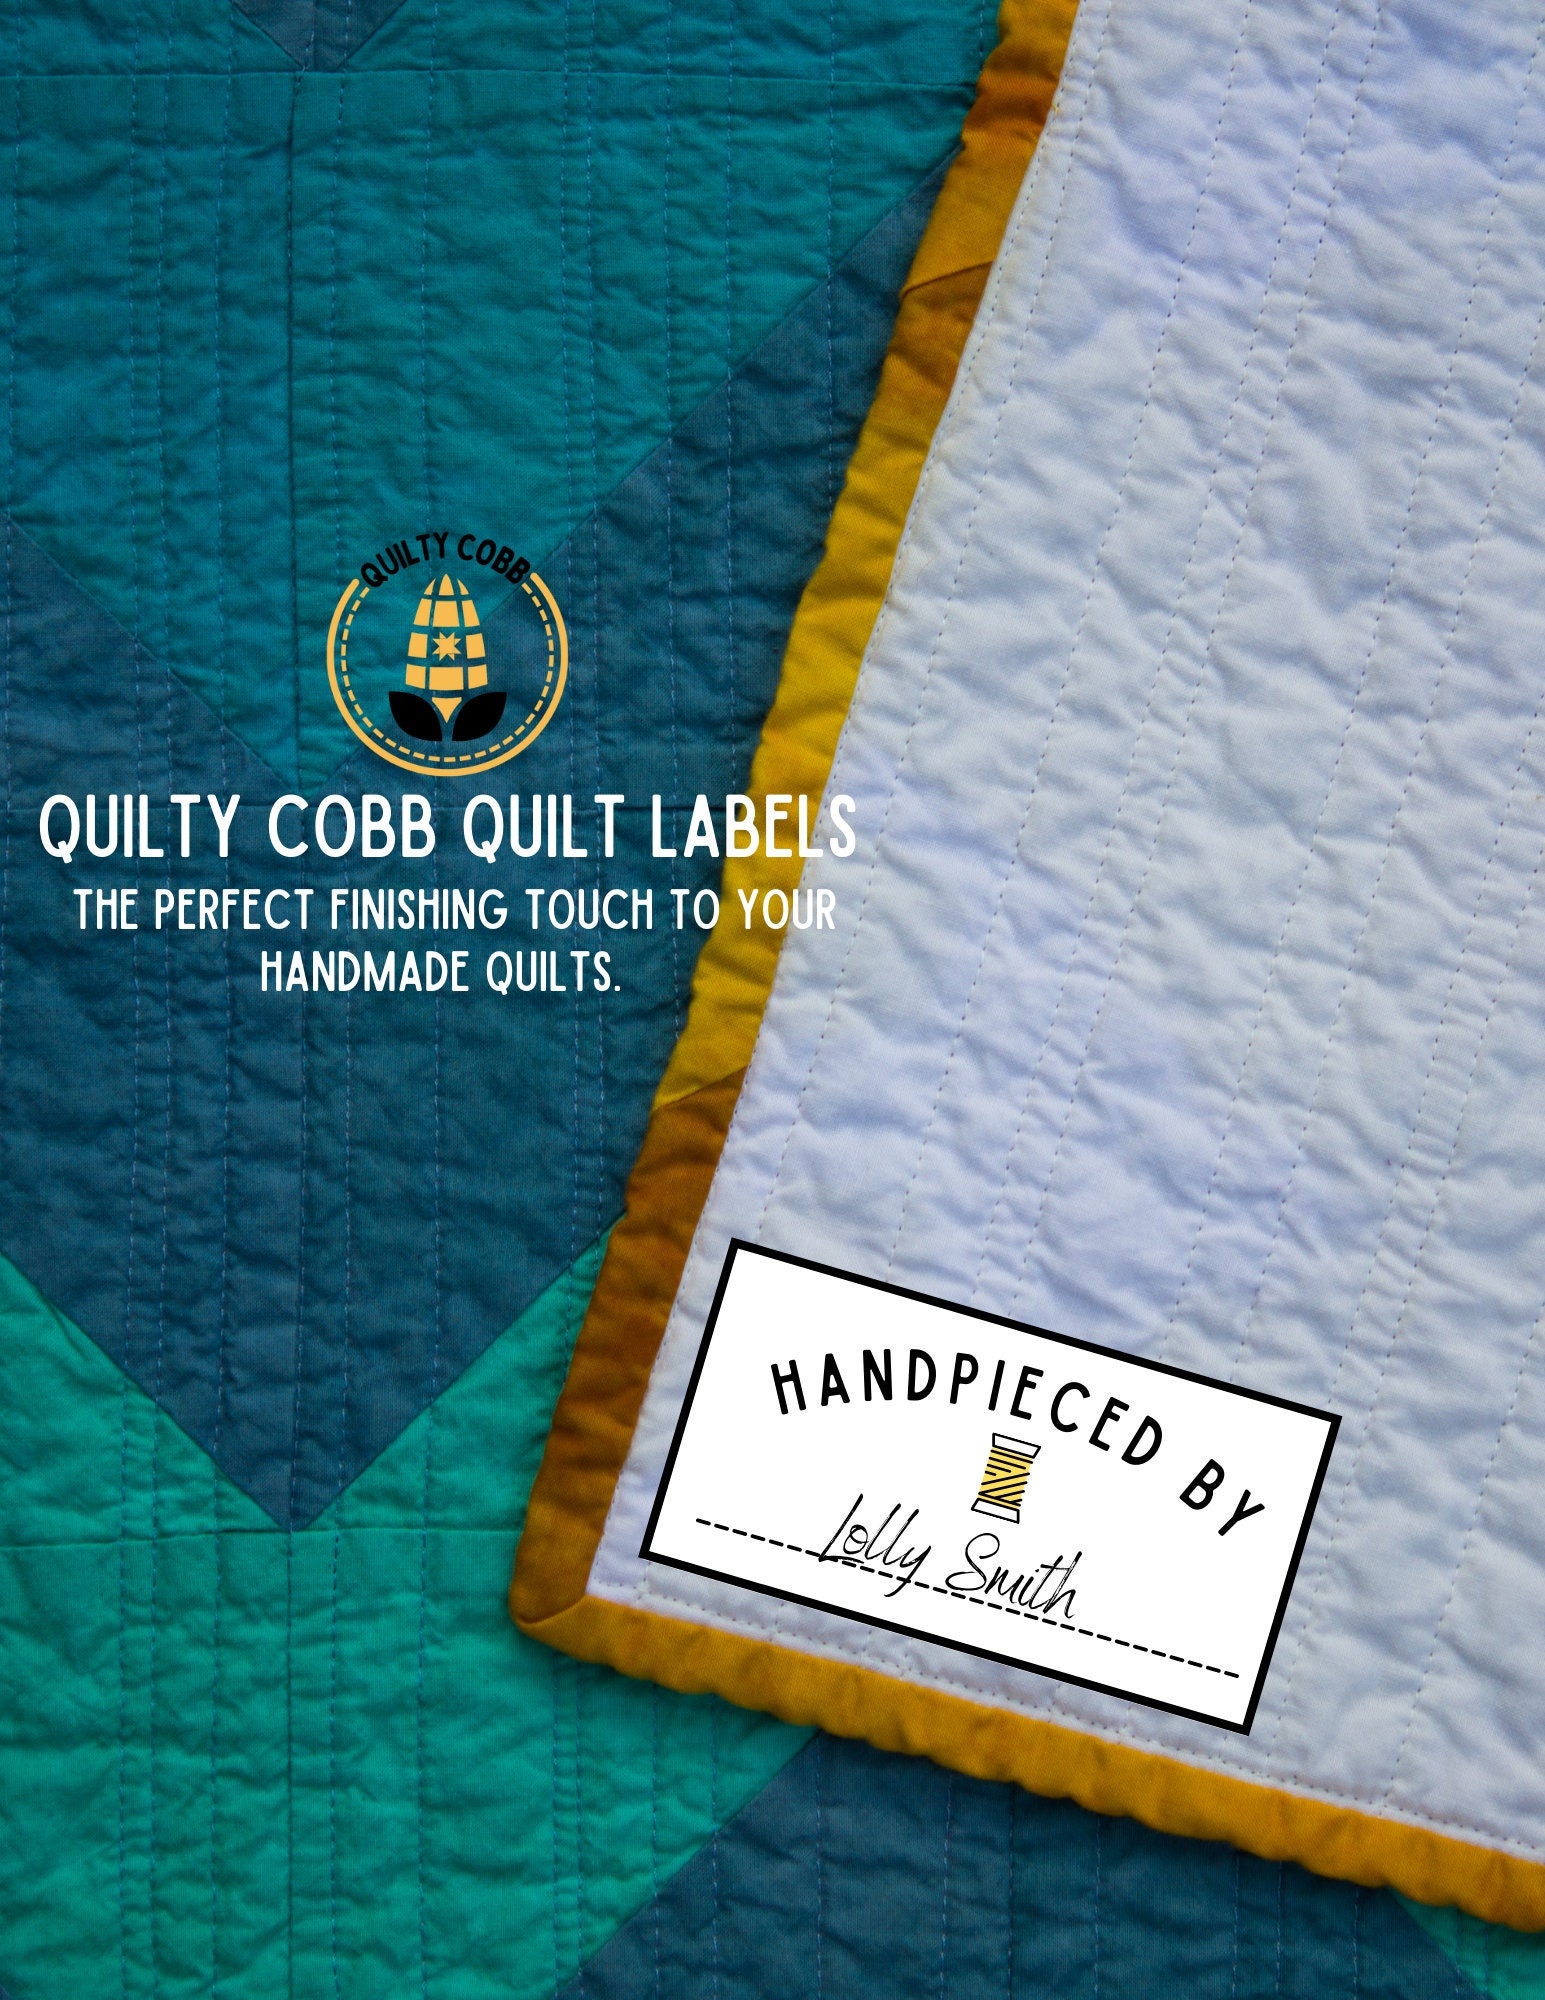 Quilt Labels, Funny Quilt Labels, Quilt Retreat, Gifts, Digital